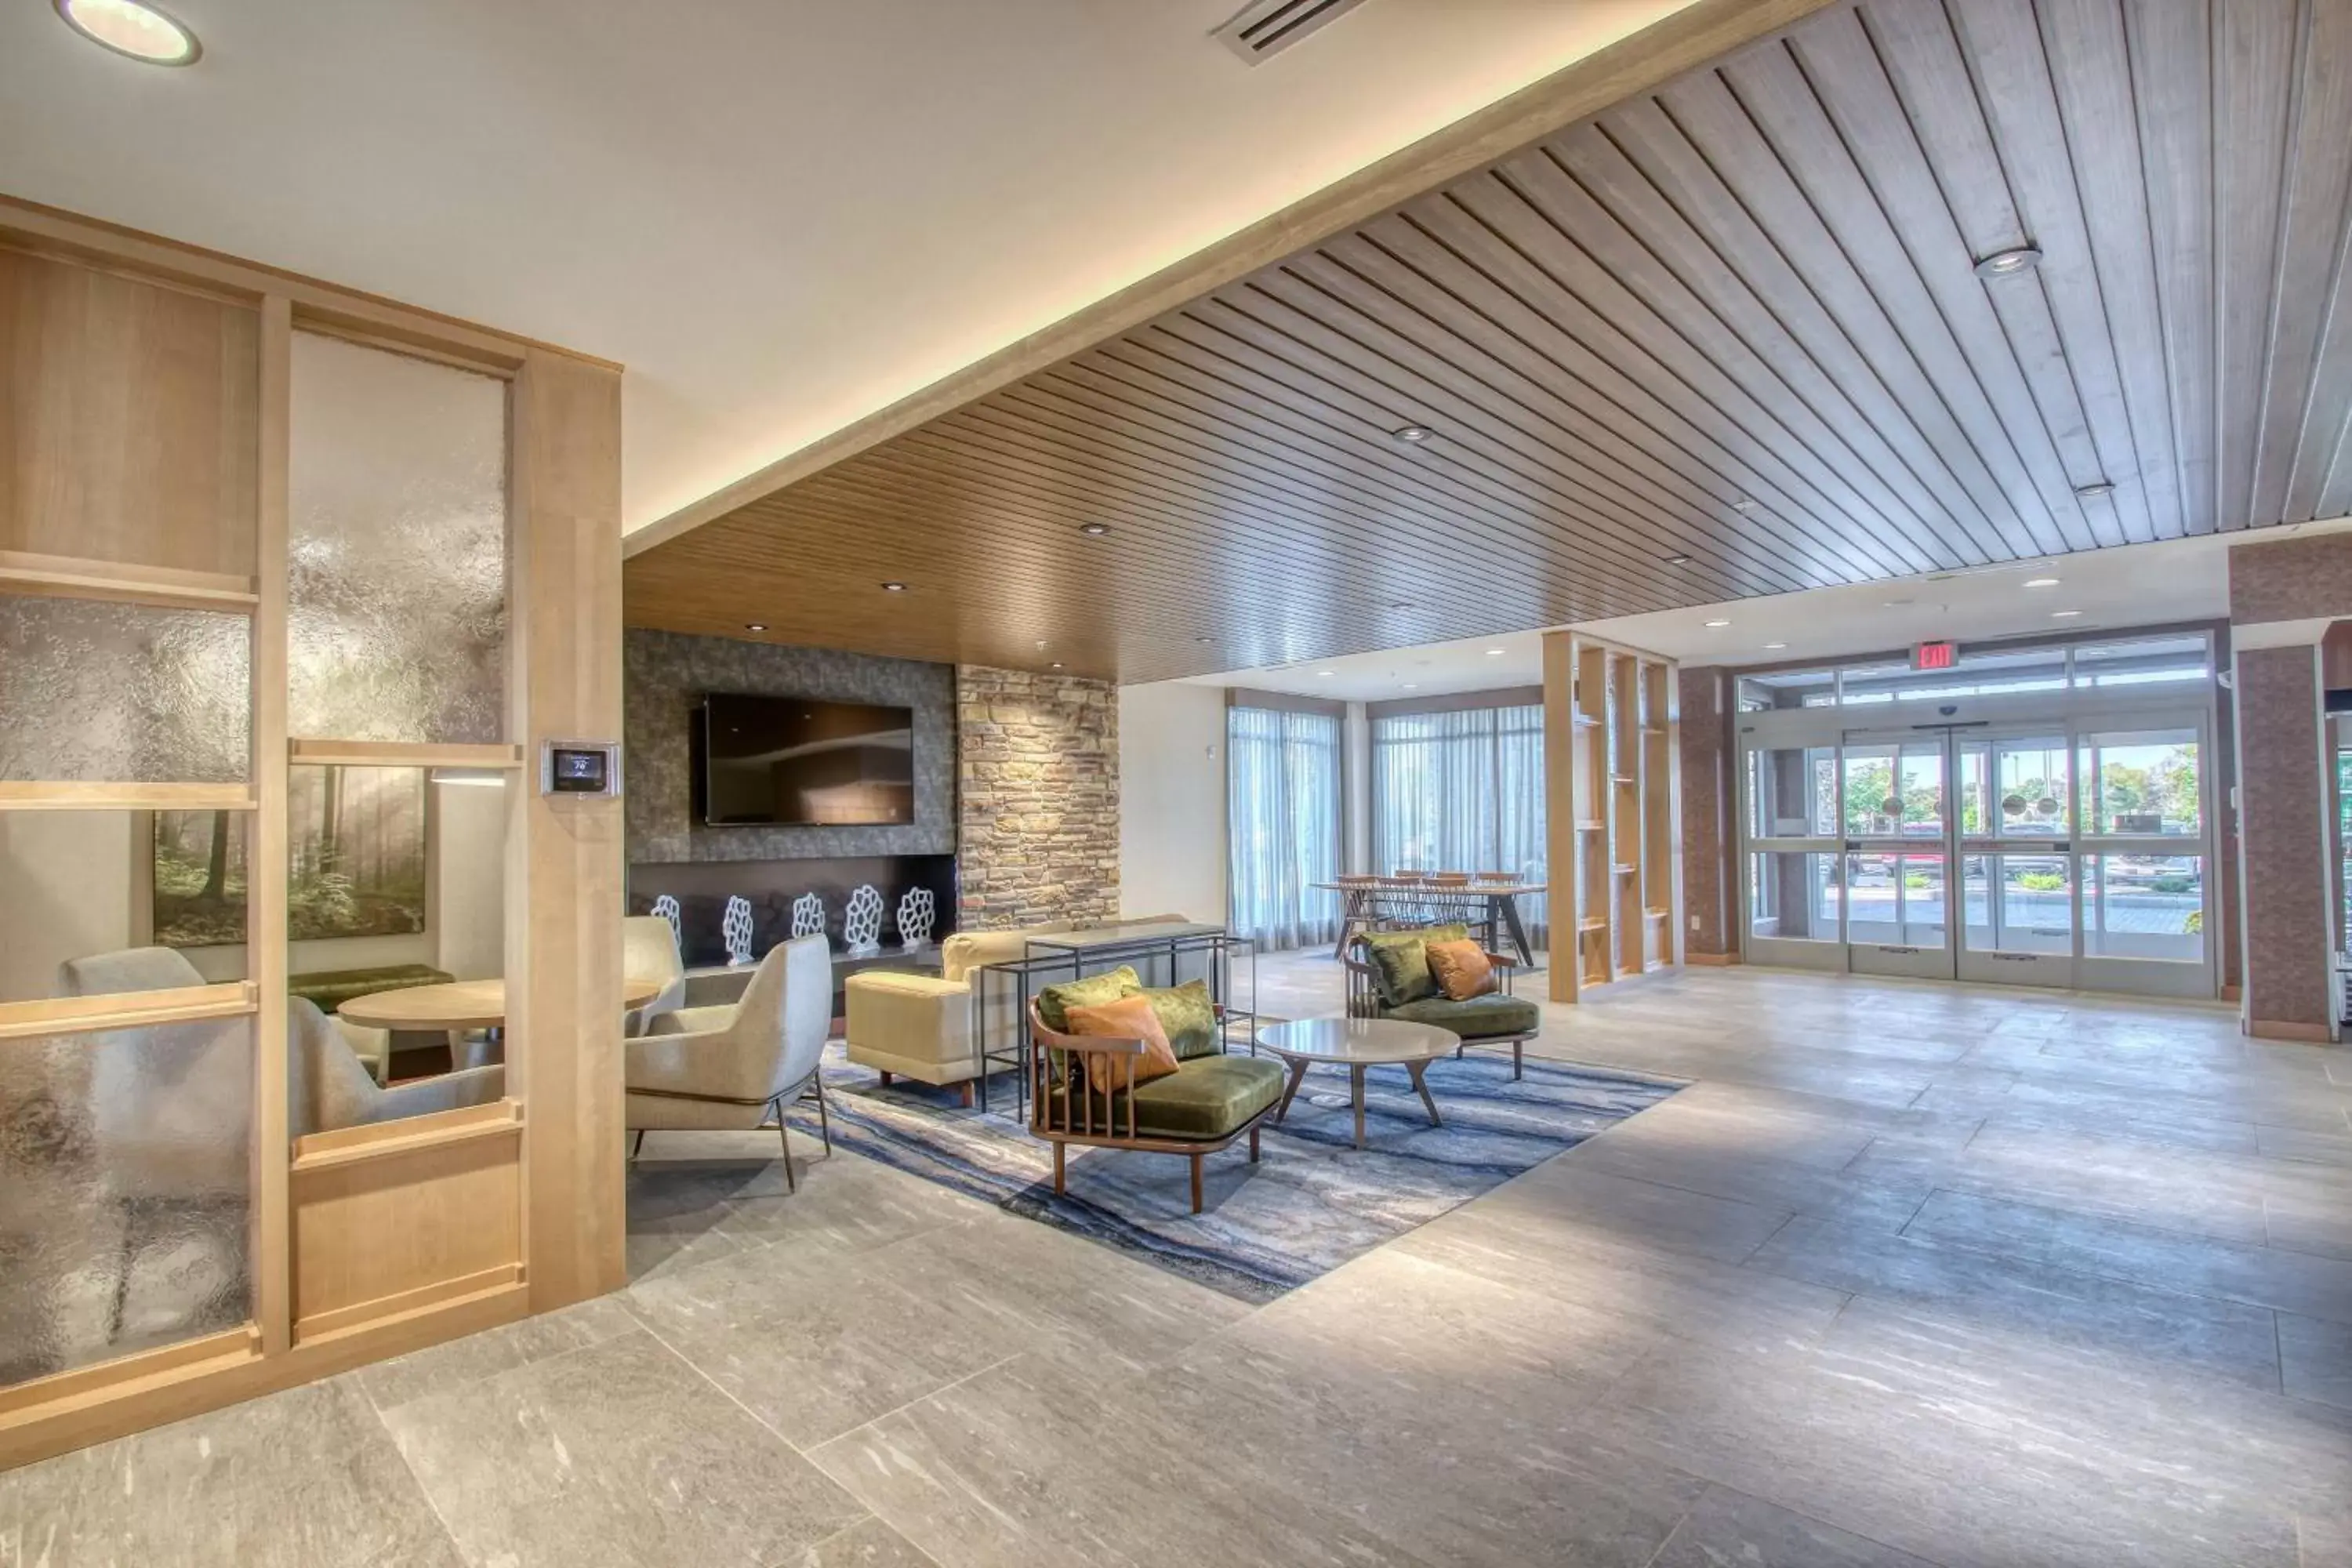 Lobby or reception in Fairfield Inn & Suites by Marriott Appleton